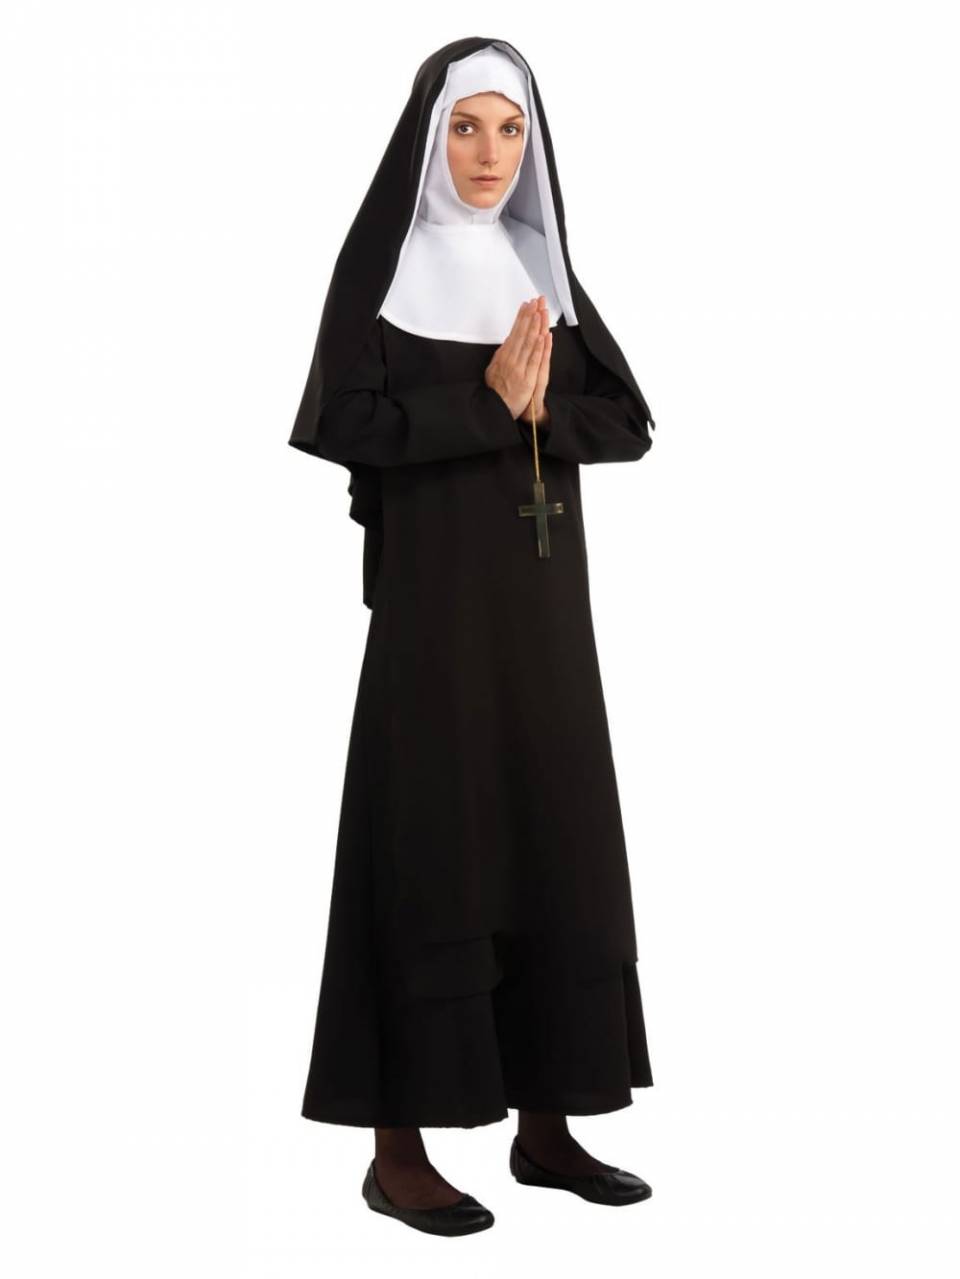 nun-fancy-dress-costume-p10671-146288_image.jpg